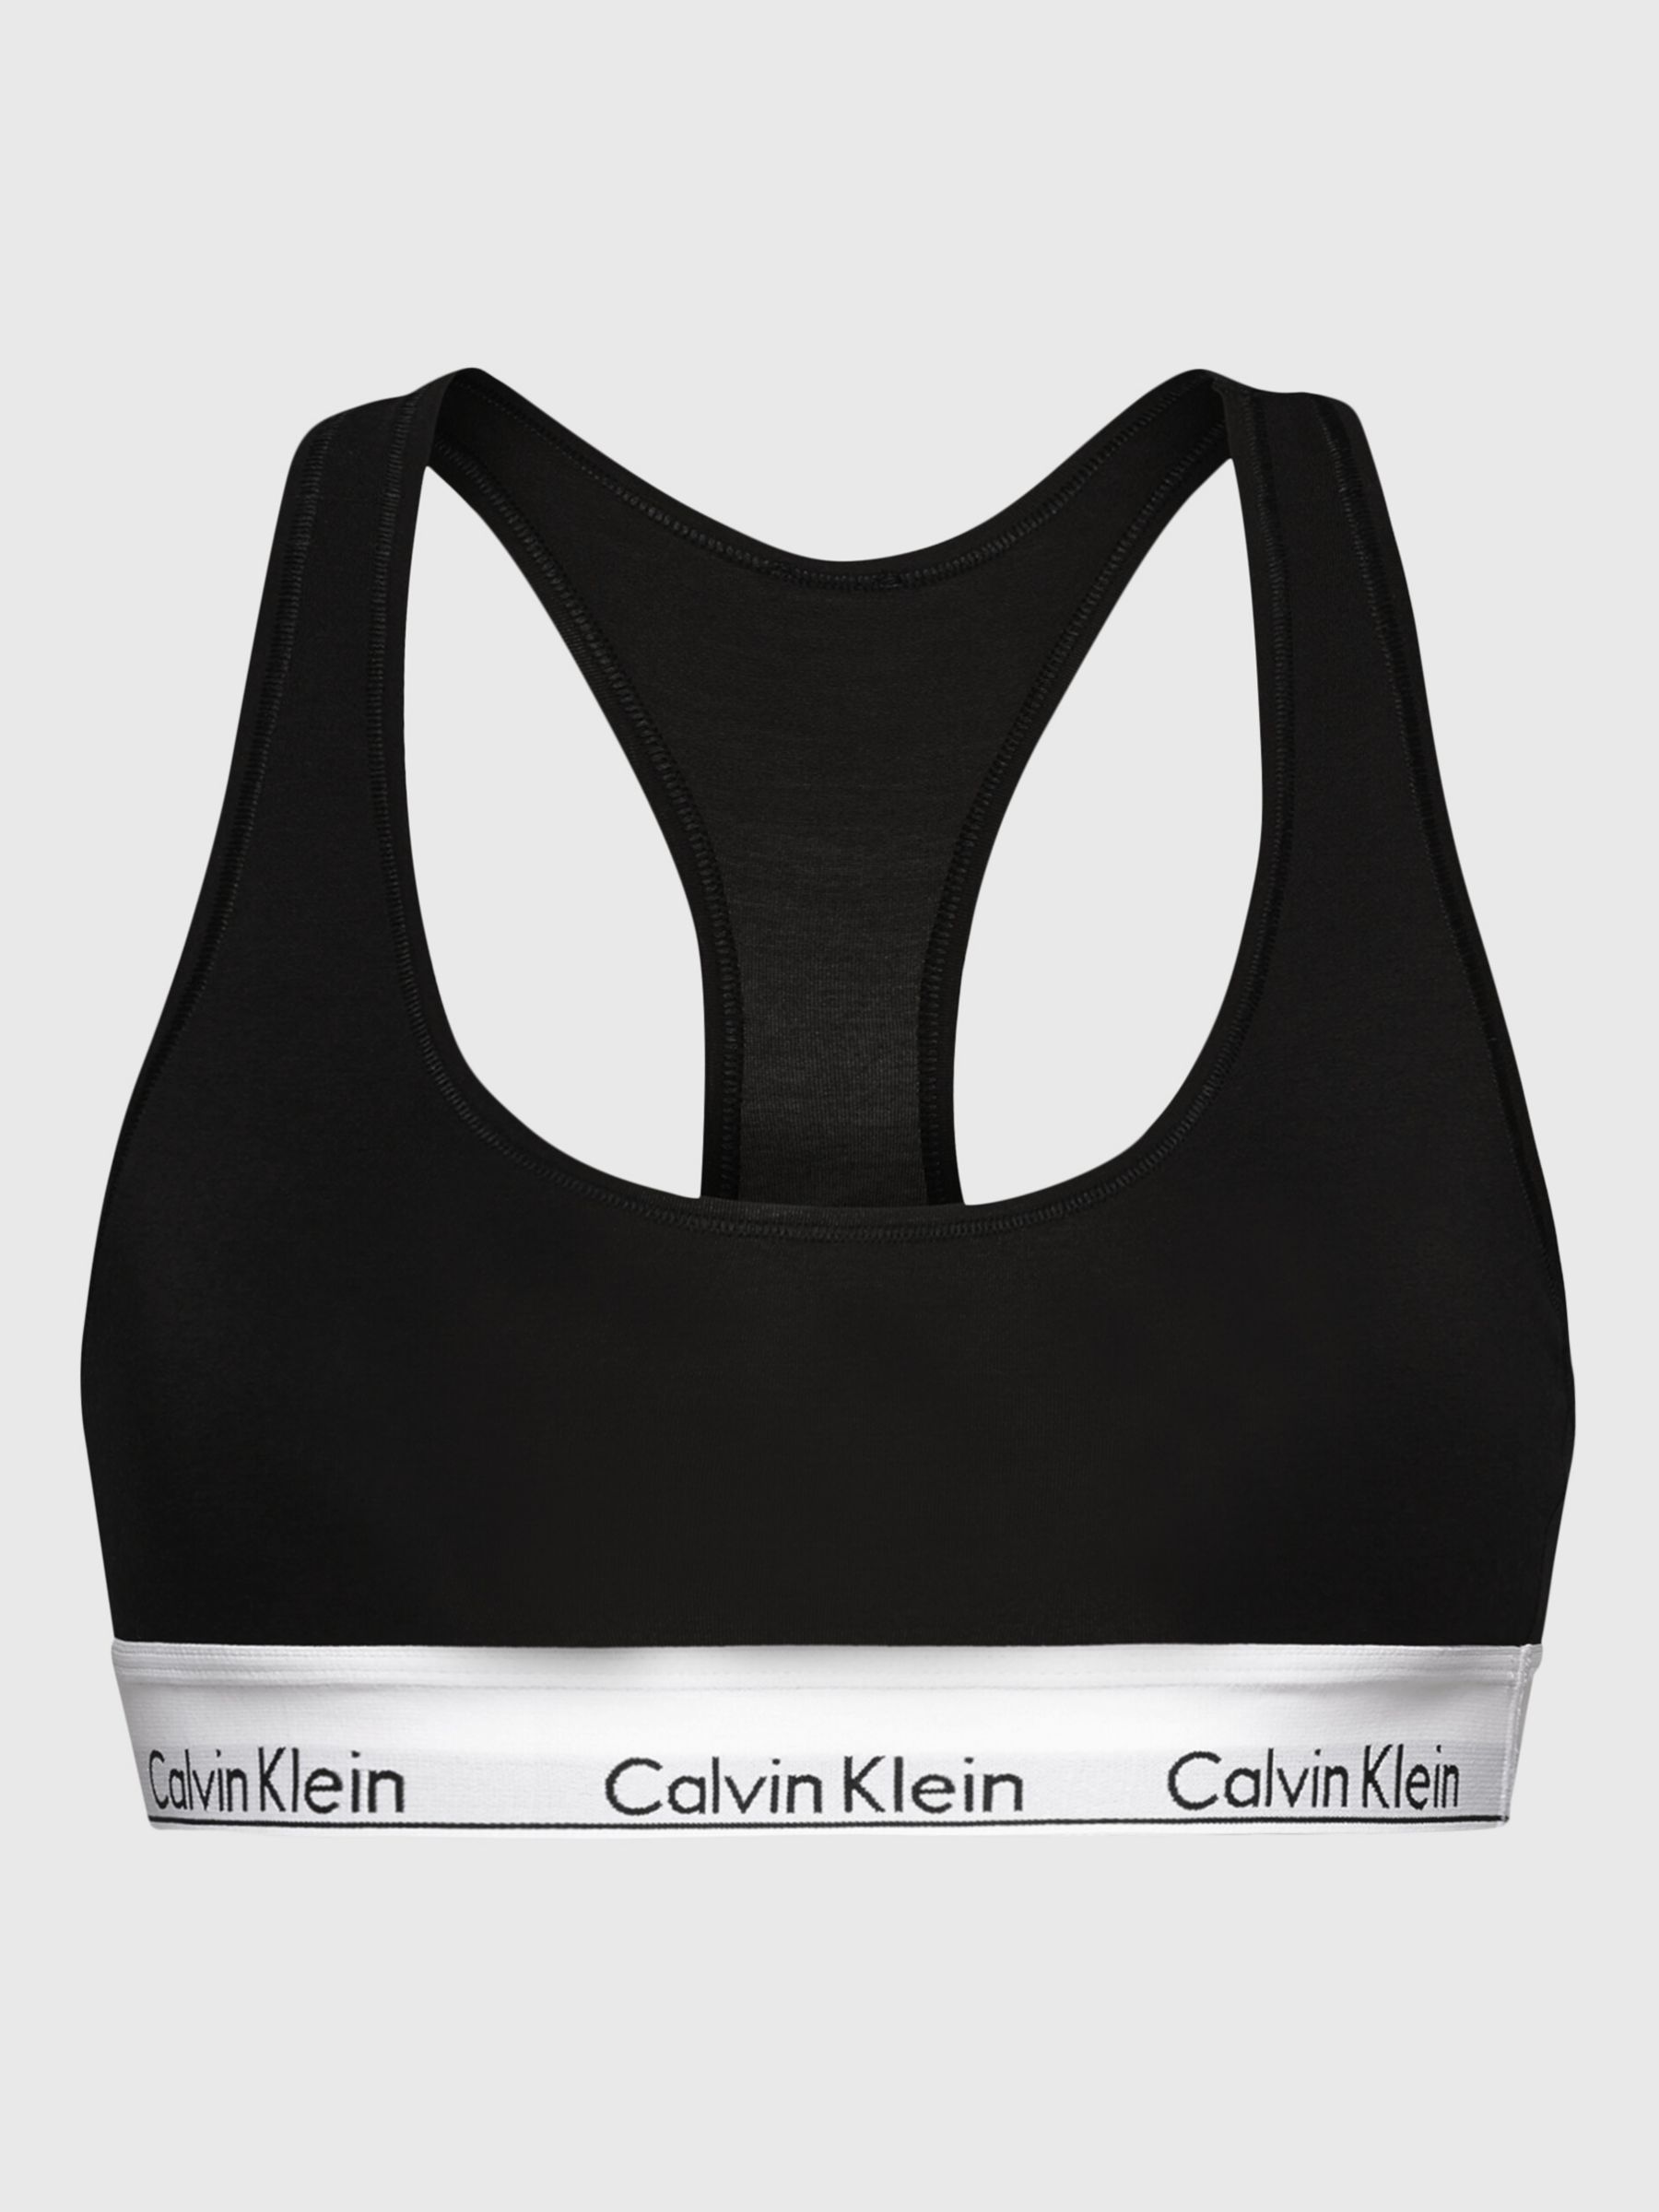 Calvin Klein View All Women's Lingerie & Underwear | John Lewis & Partners